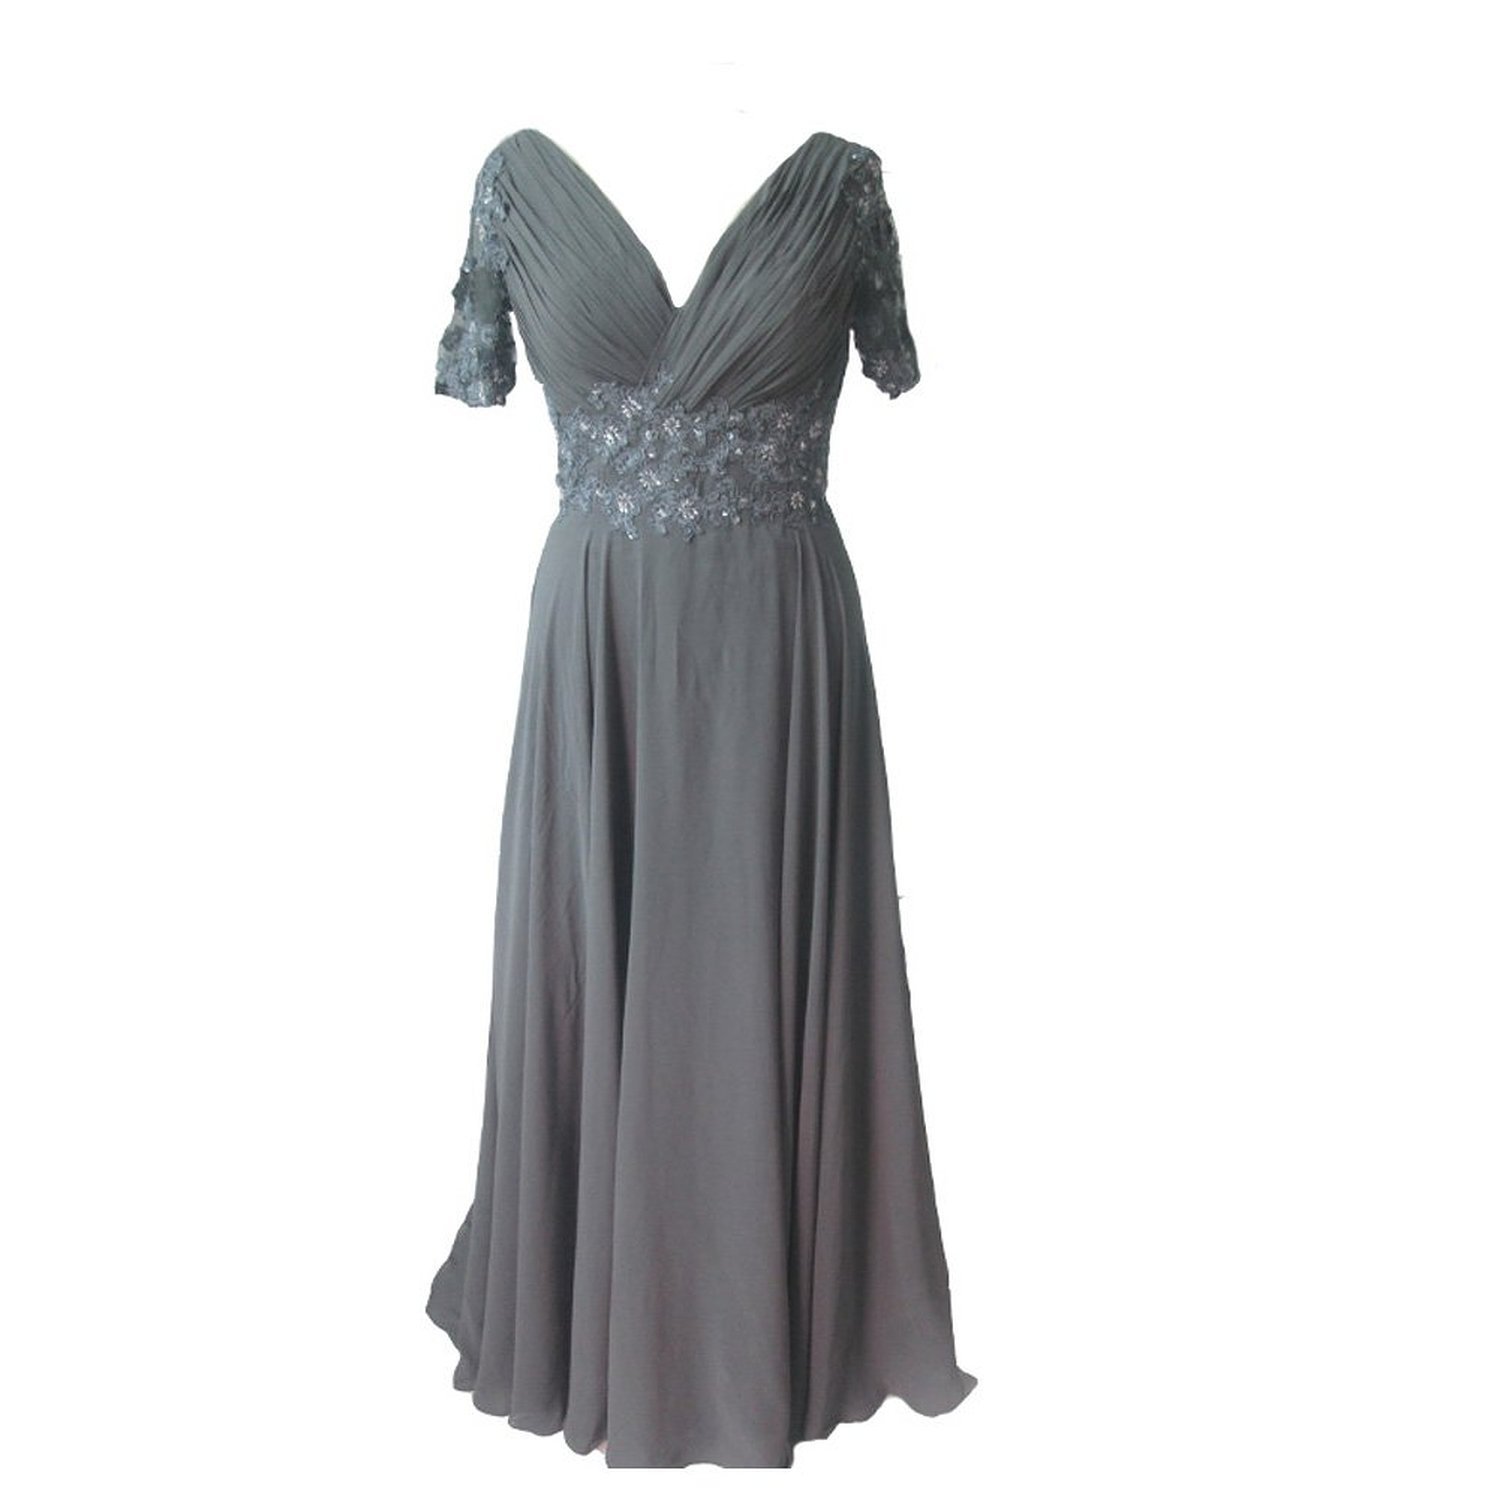 Kivary Sheer Short Sleeves Grey Chiffon Evening Mother of the Bride Dresses US 4